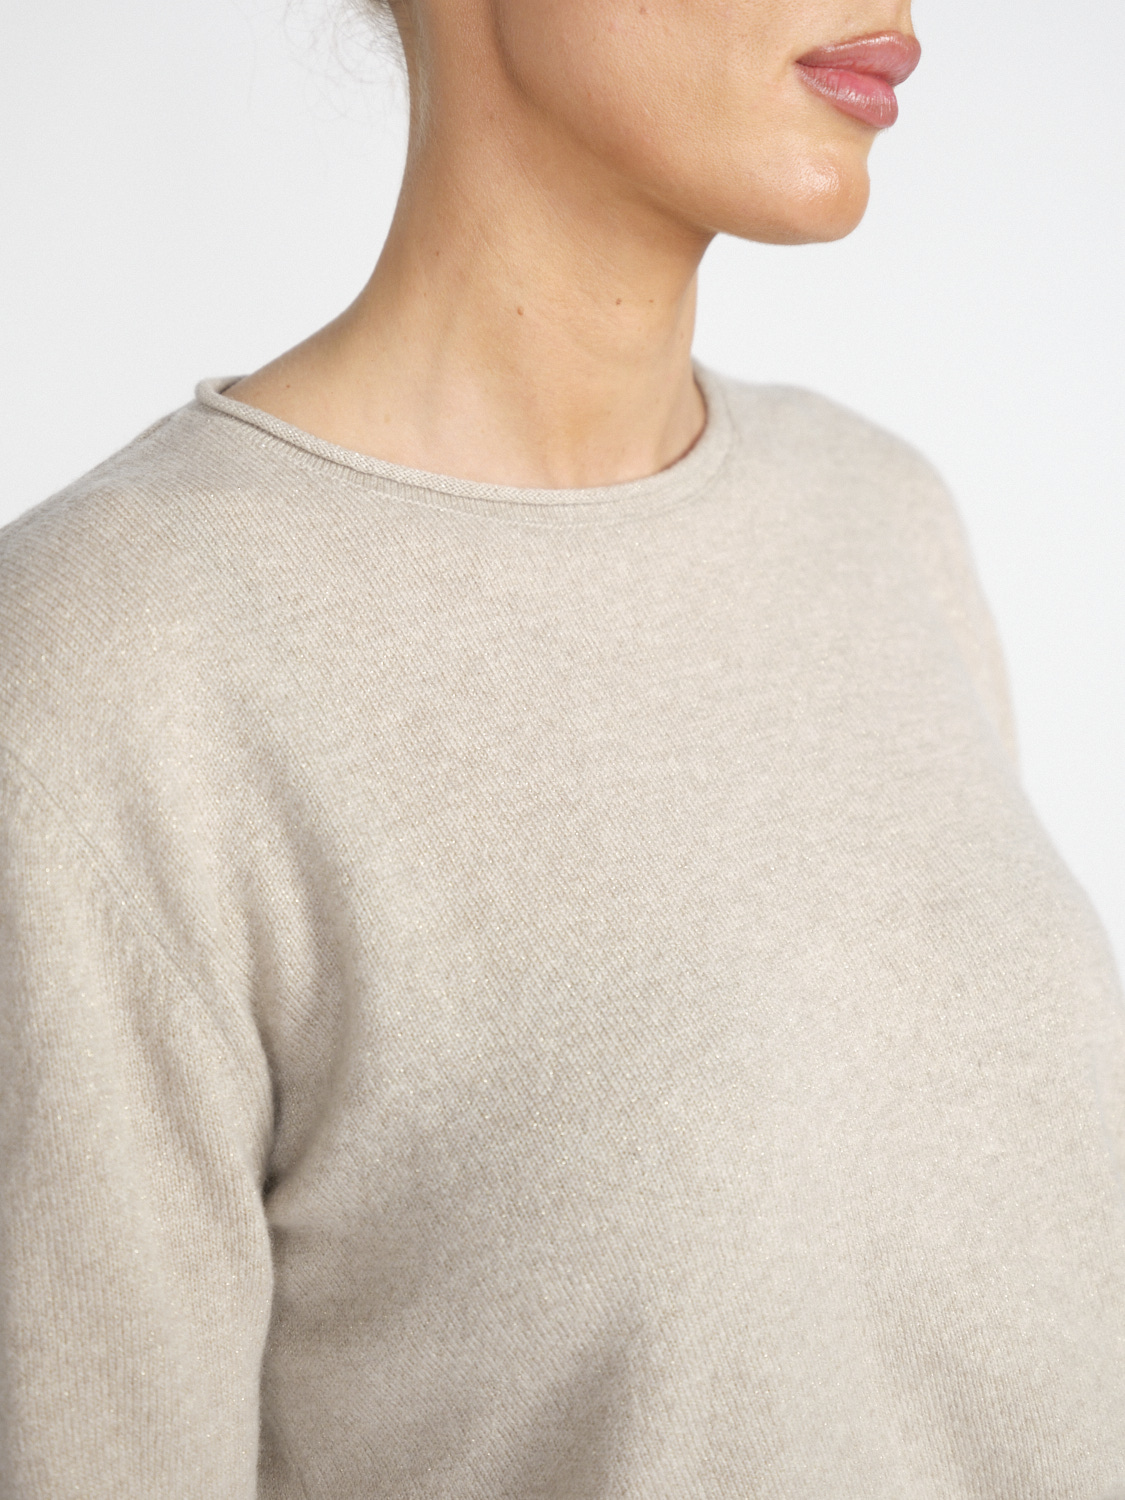 Lisa Yang Ida - Lightweight cashmere jumper with glitter effects  beige XS/S